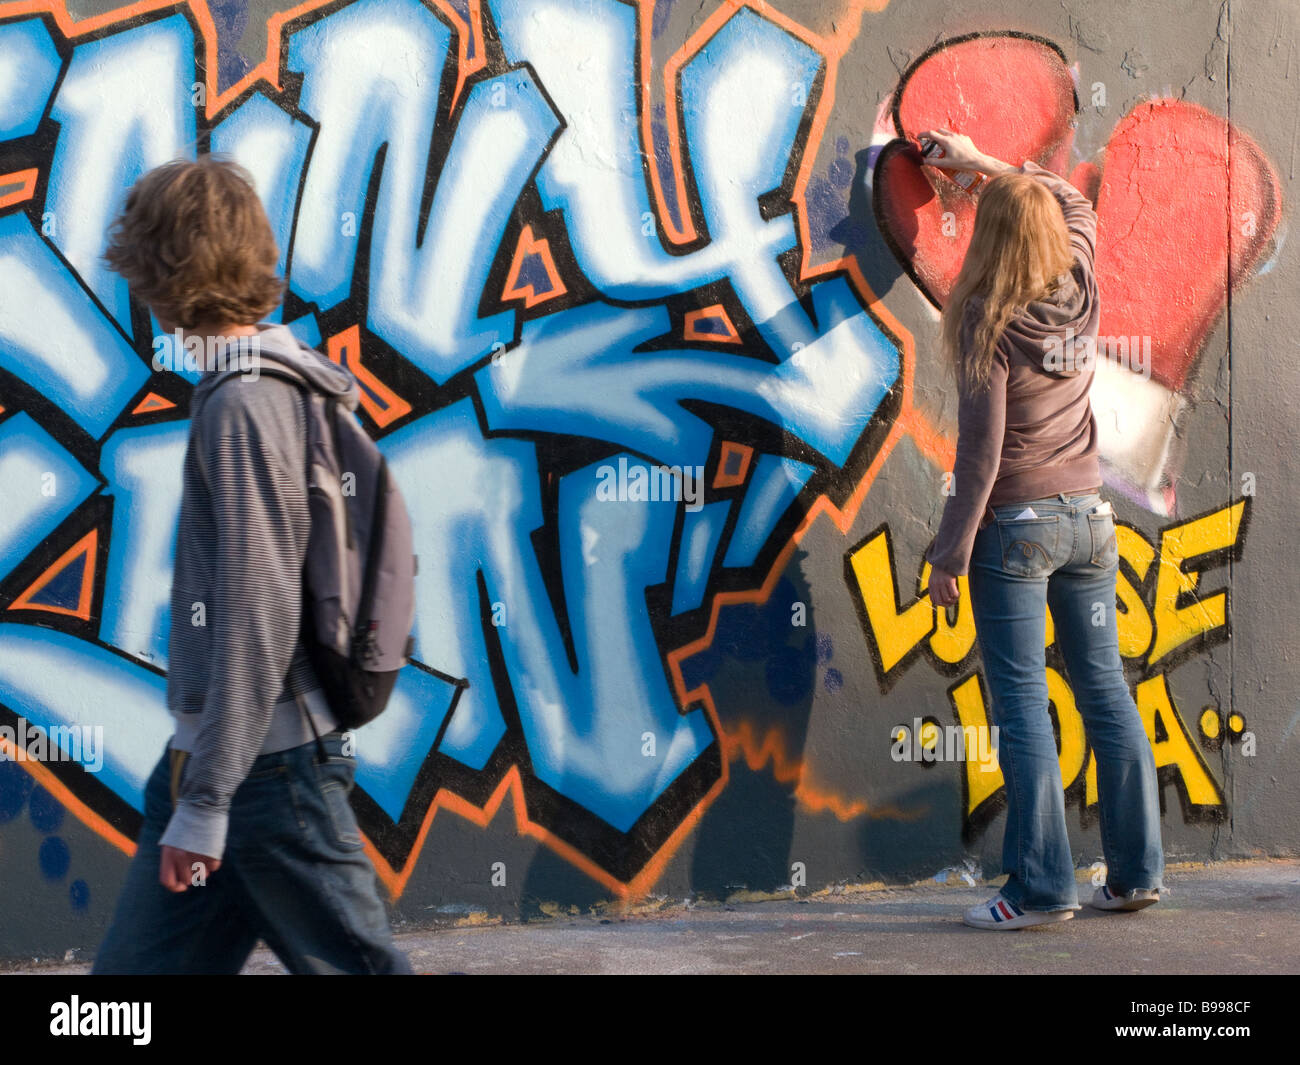 Female graffiti artist and onlooker Stock Photo